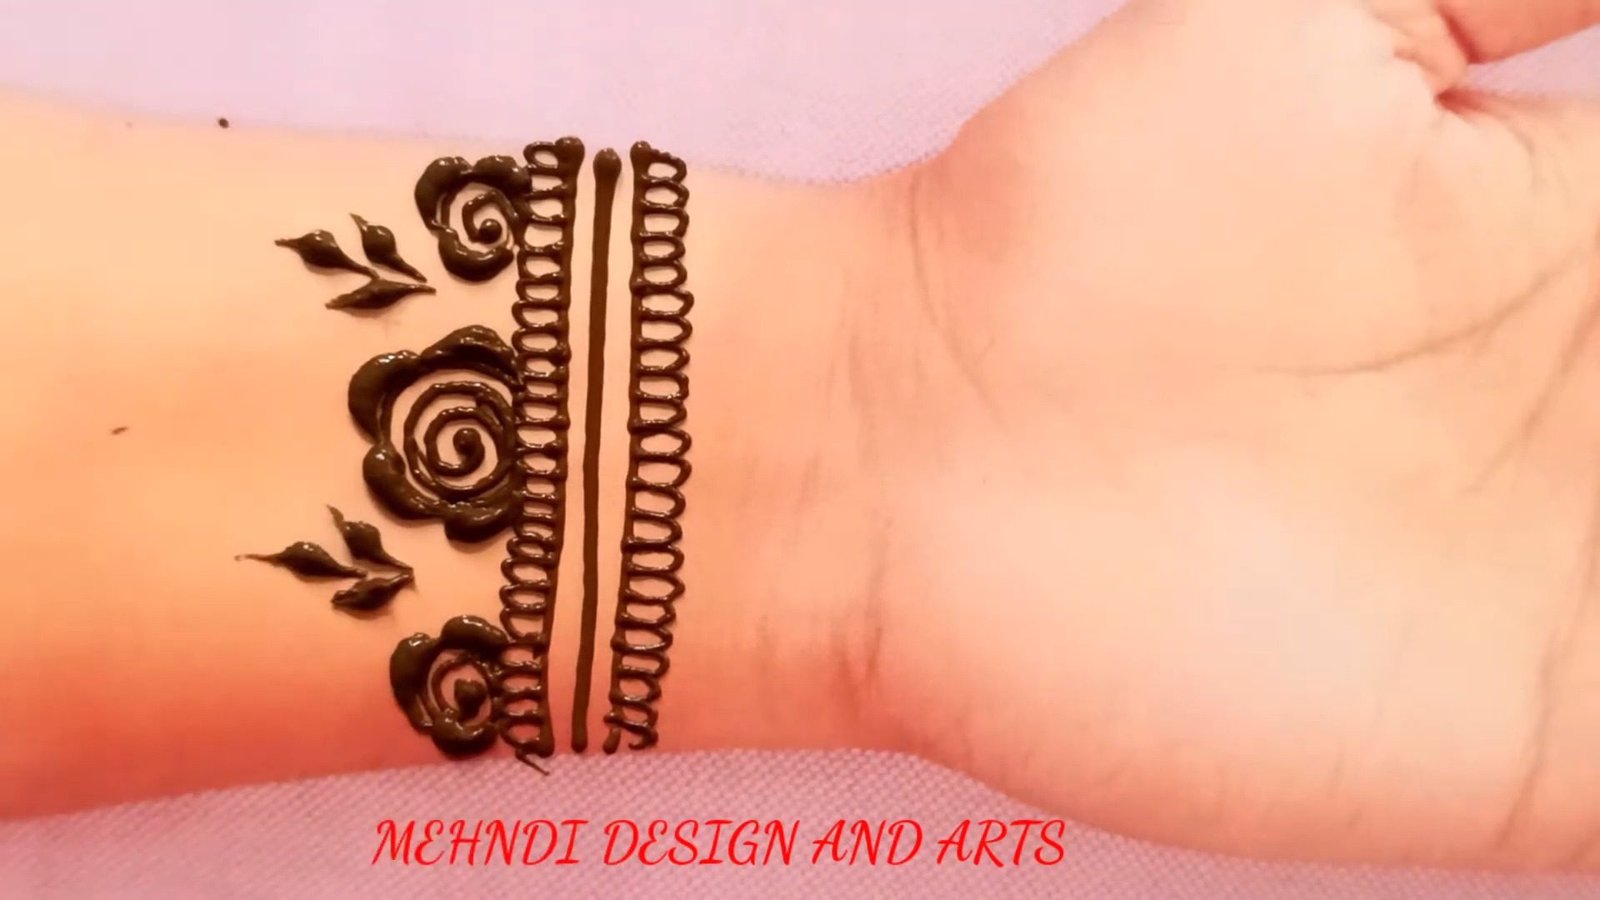 Stylish Full Hand Mehndi Design For Front Hand